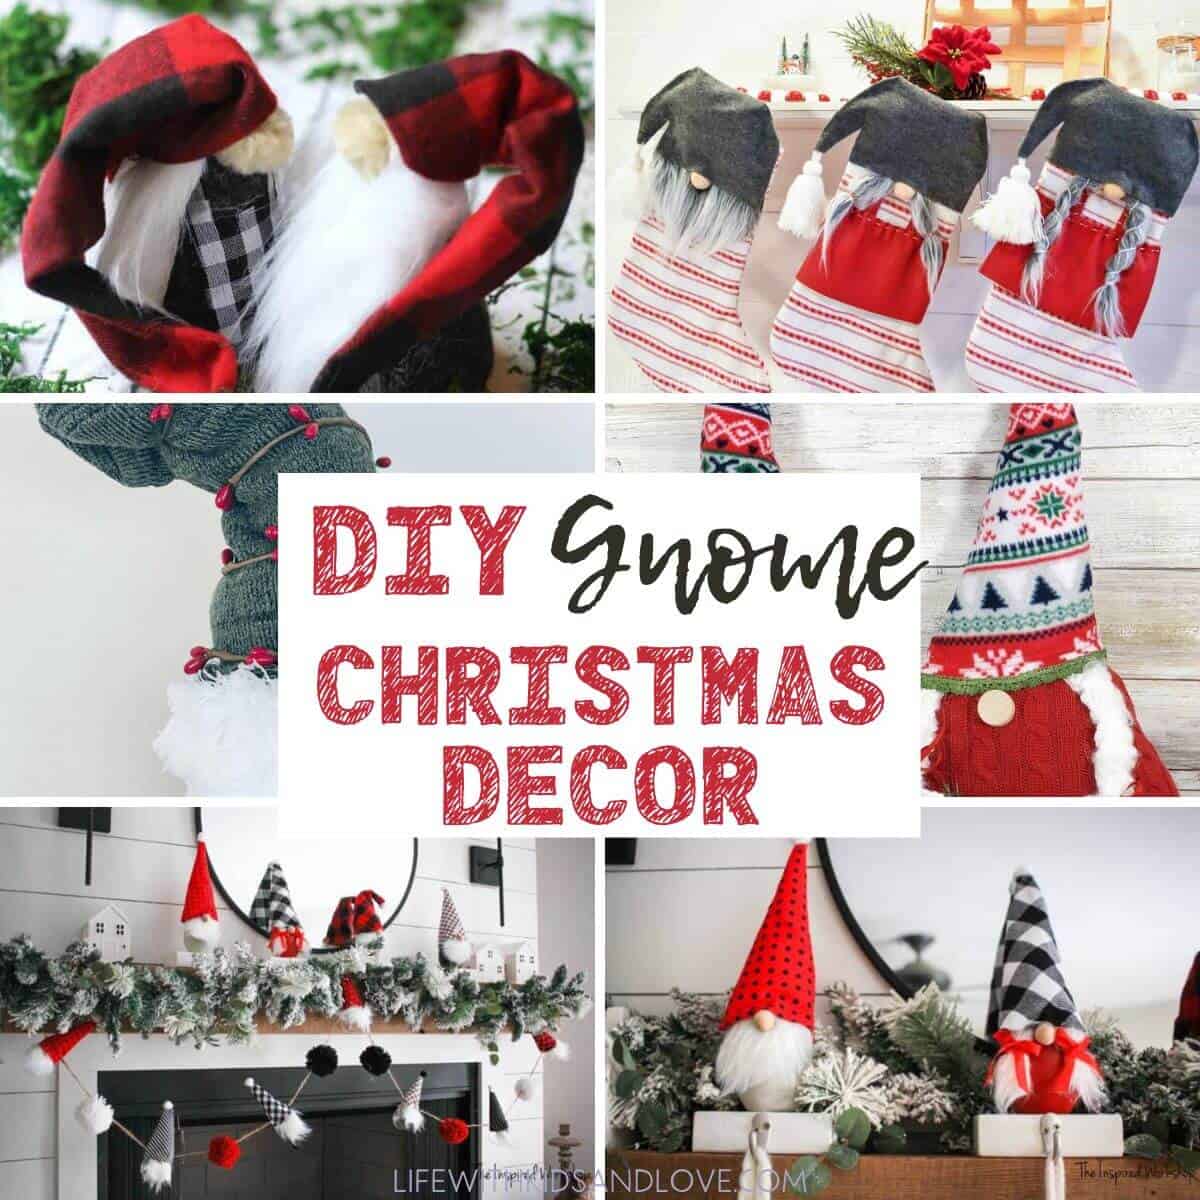 DIY Gnome Christmas Decorations